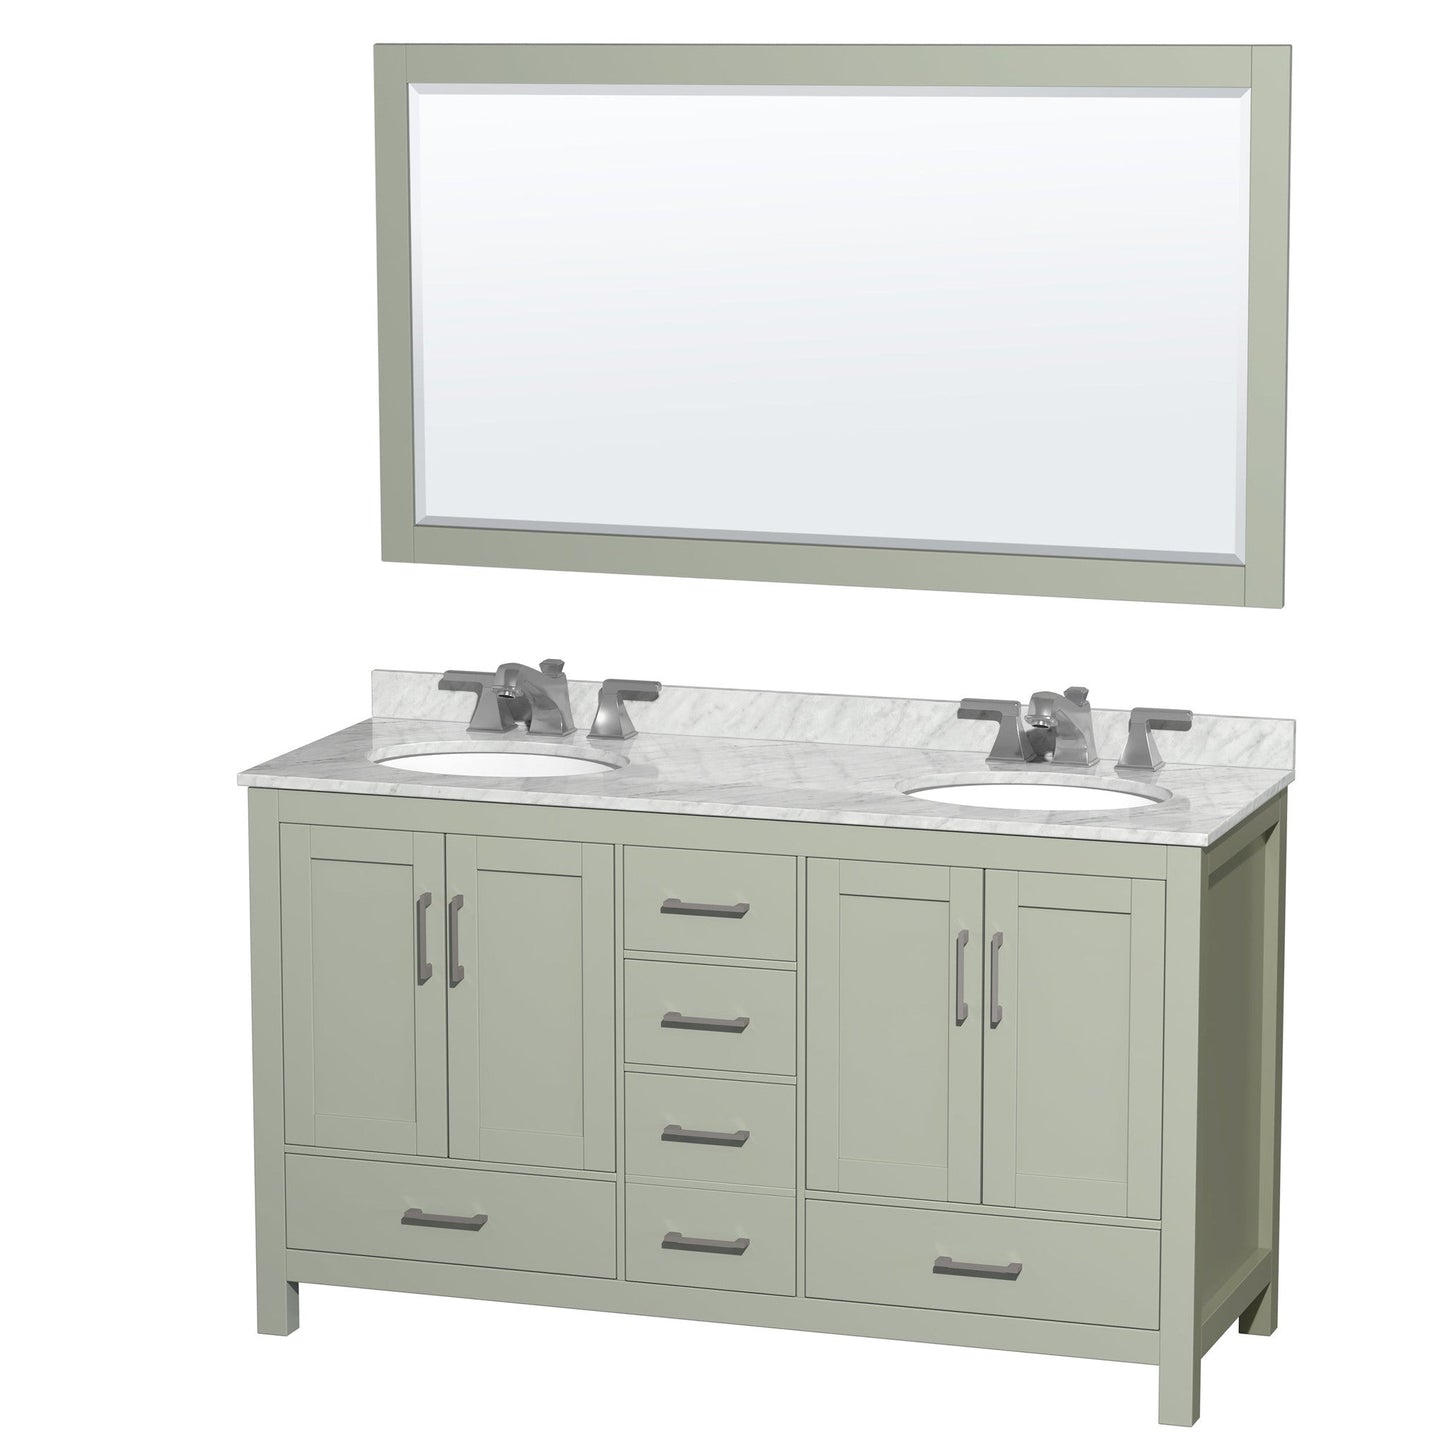 Sheffield 60" Double Bathroom Vanity in Light Green, White Carrara Marble Countertop, Undermount Oval Sinks, Brushed Nickel Trim, 58" Mirror